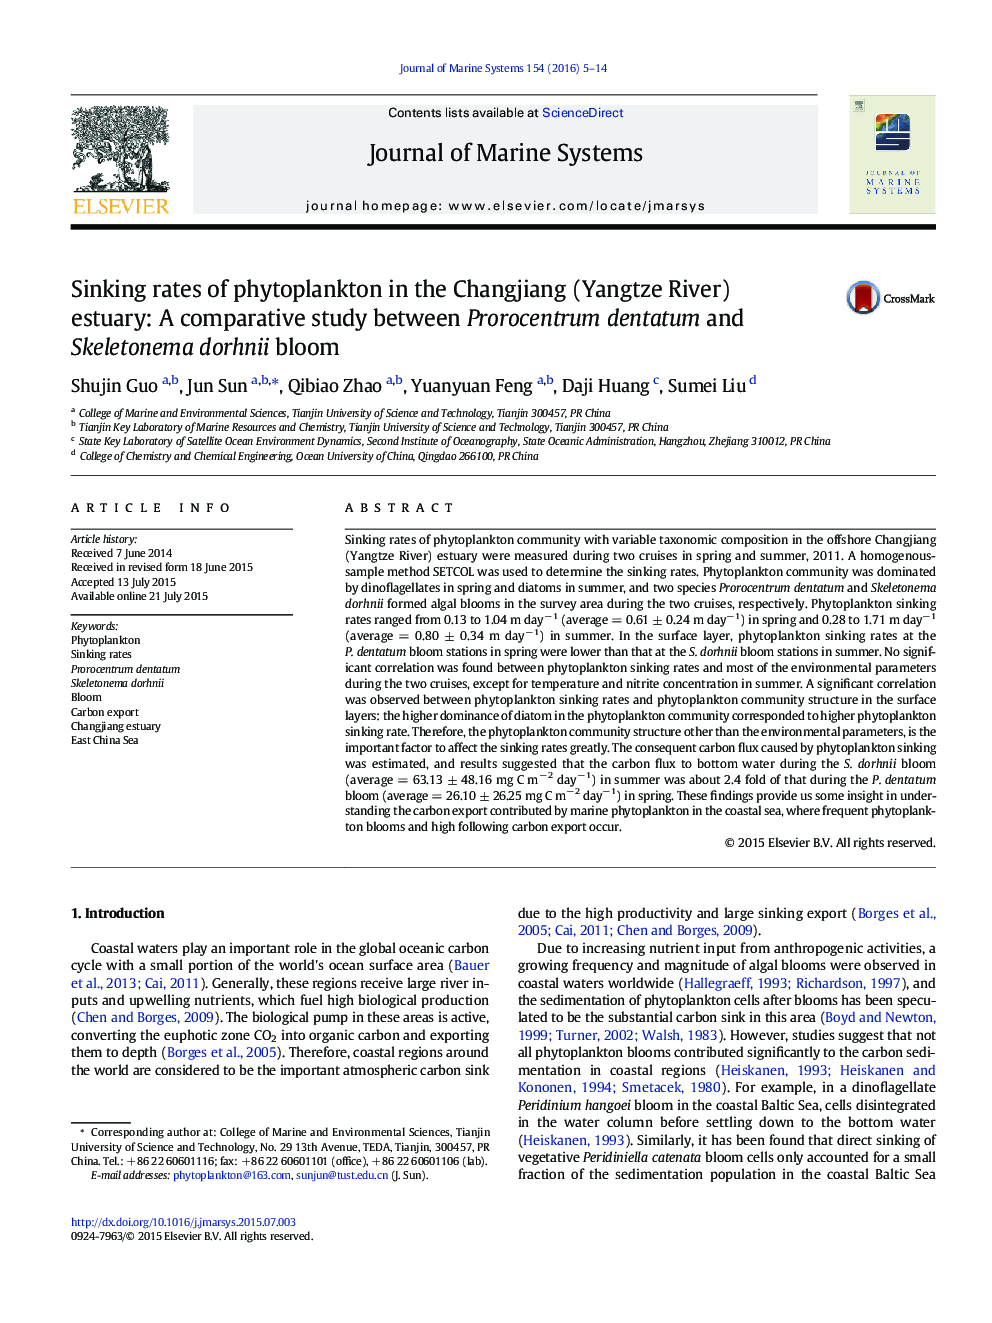 Sinking rates of phytoplankton in the Changjiang (Yangtze River) estuary: A comparative study between Prorocentrum dentatum and Skeletonema dorhnii bloom